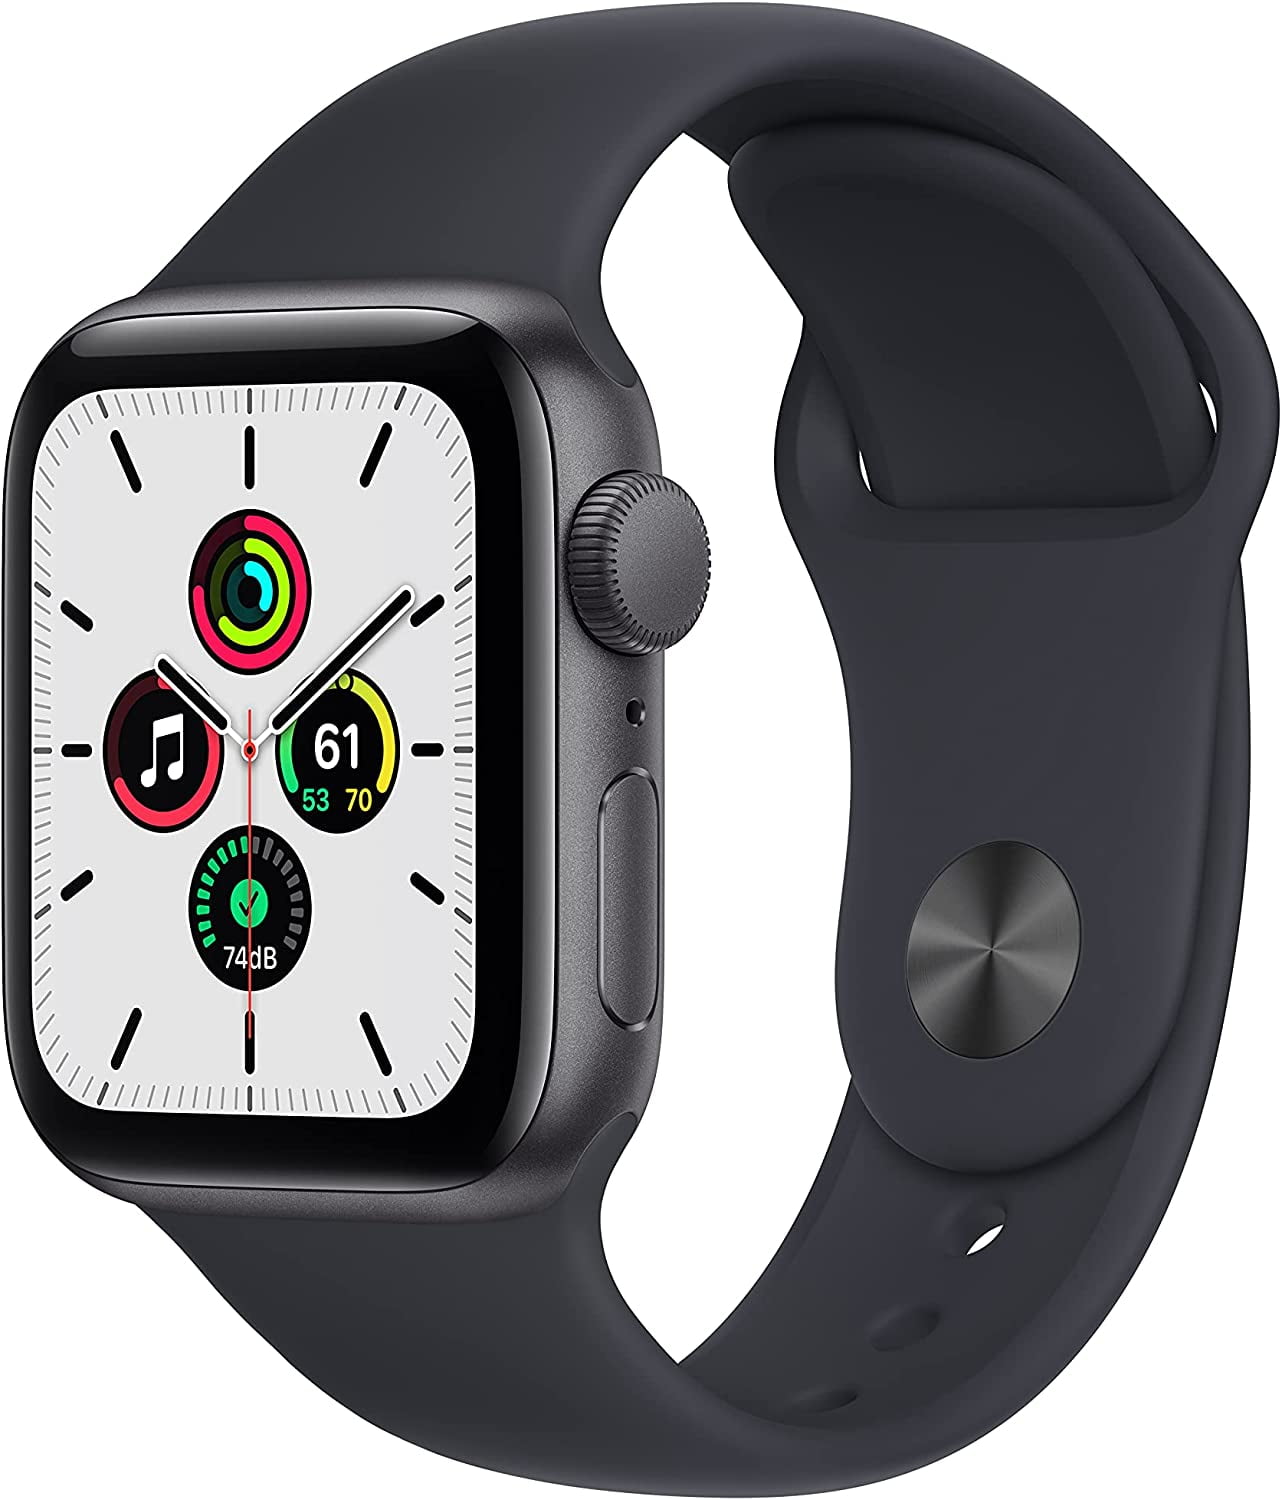 Apple Watch SE Space Gray